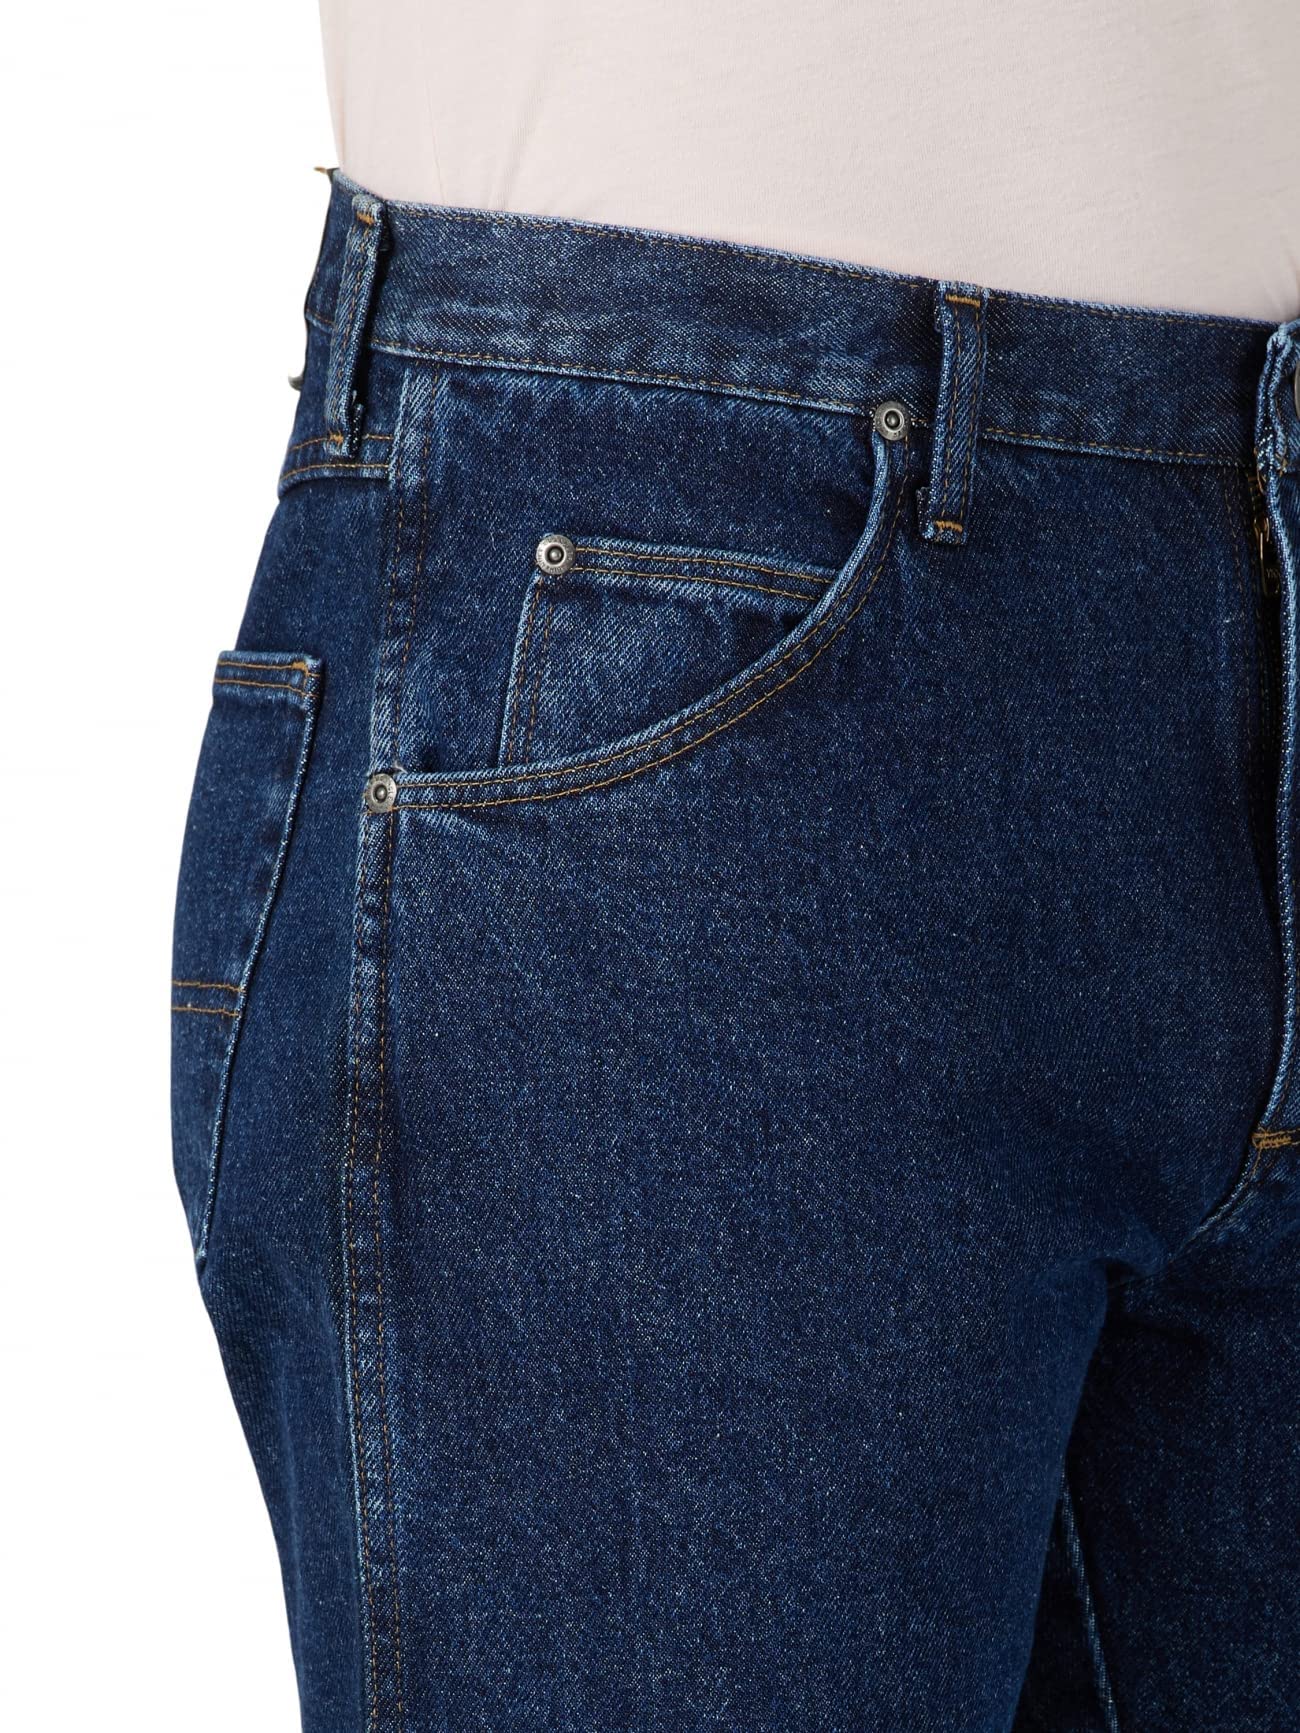 Wrangler Authentics Men's Classic 5-Pocket Regular Fit Cotton Jean, Dark Rinse, 33W x 33L